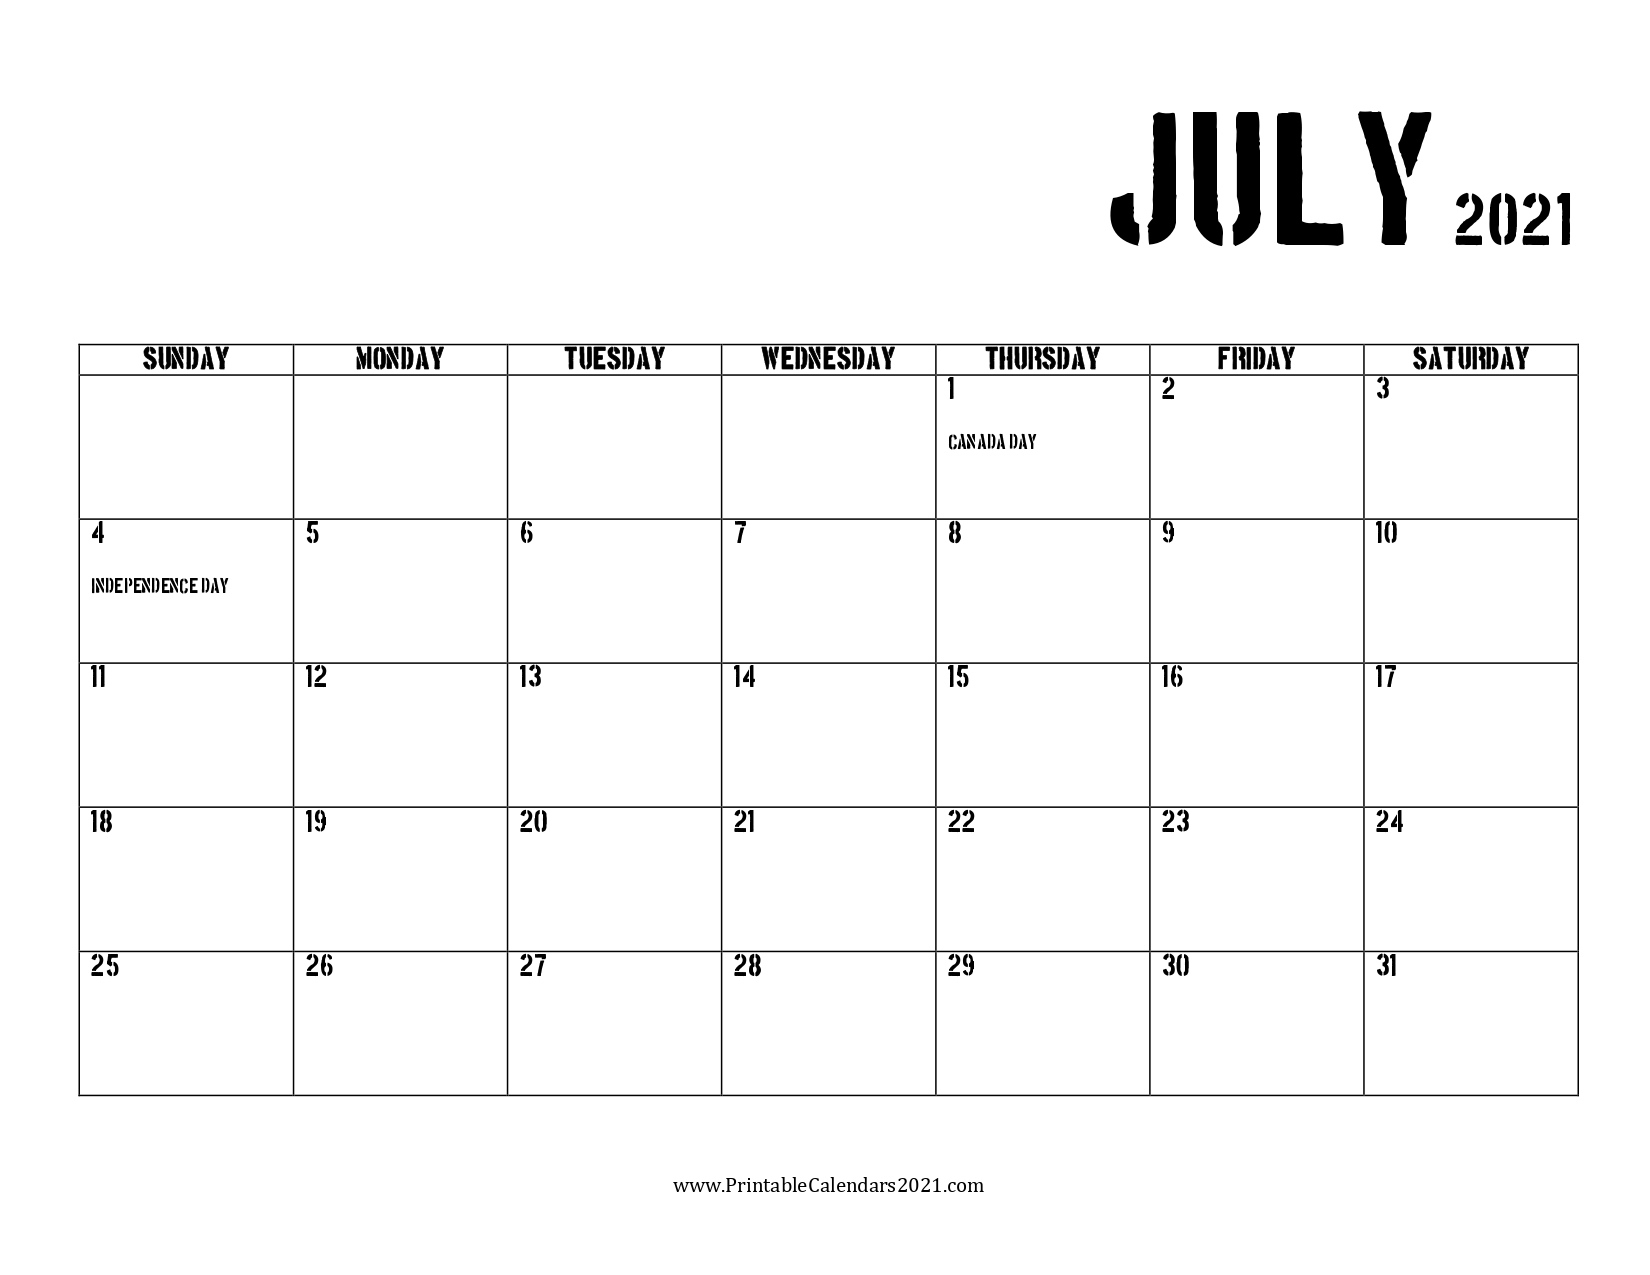 45+ July 2021 Calendar Printable, July 2021 Calendar Pdf, Blank, Free Downloadable July 2021 Calendar